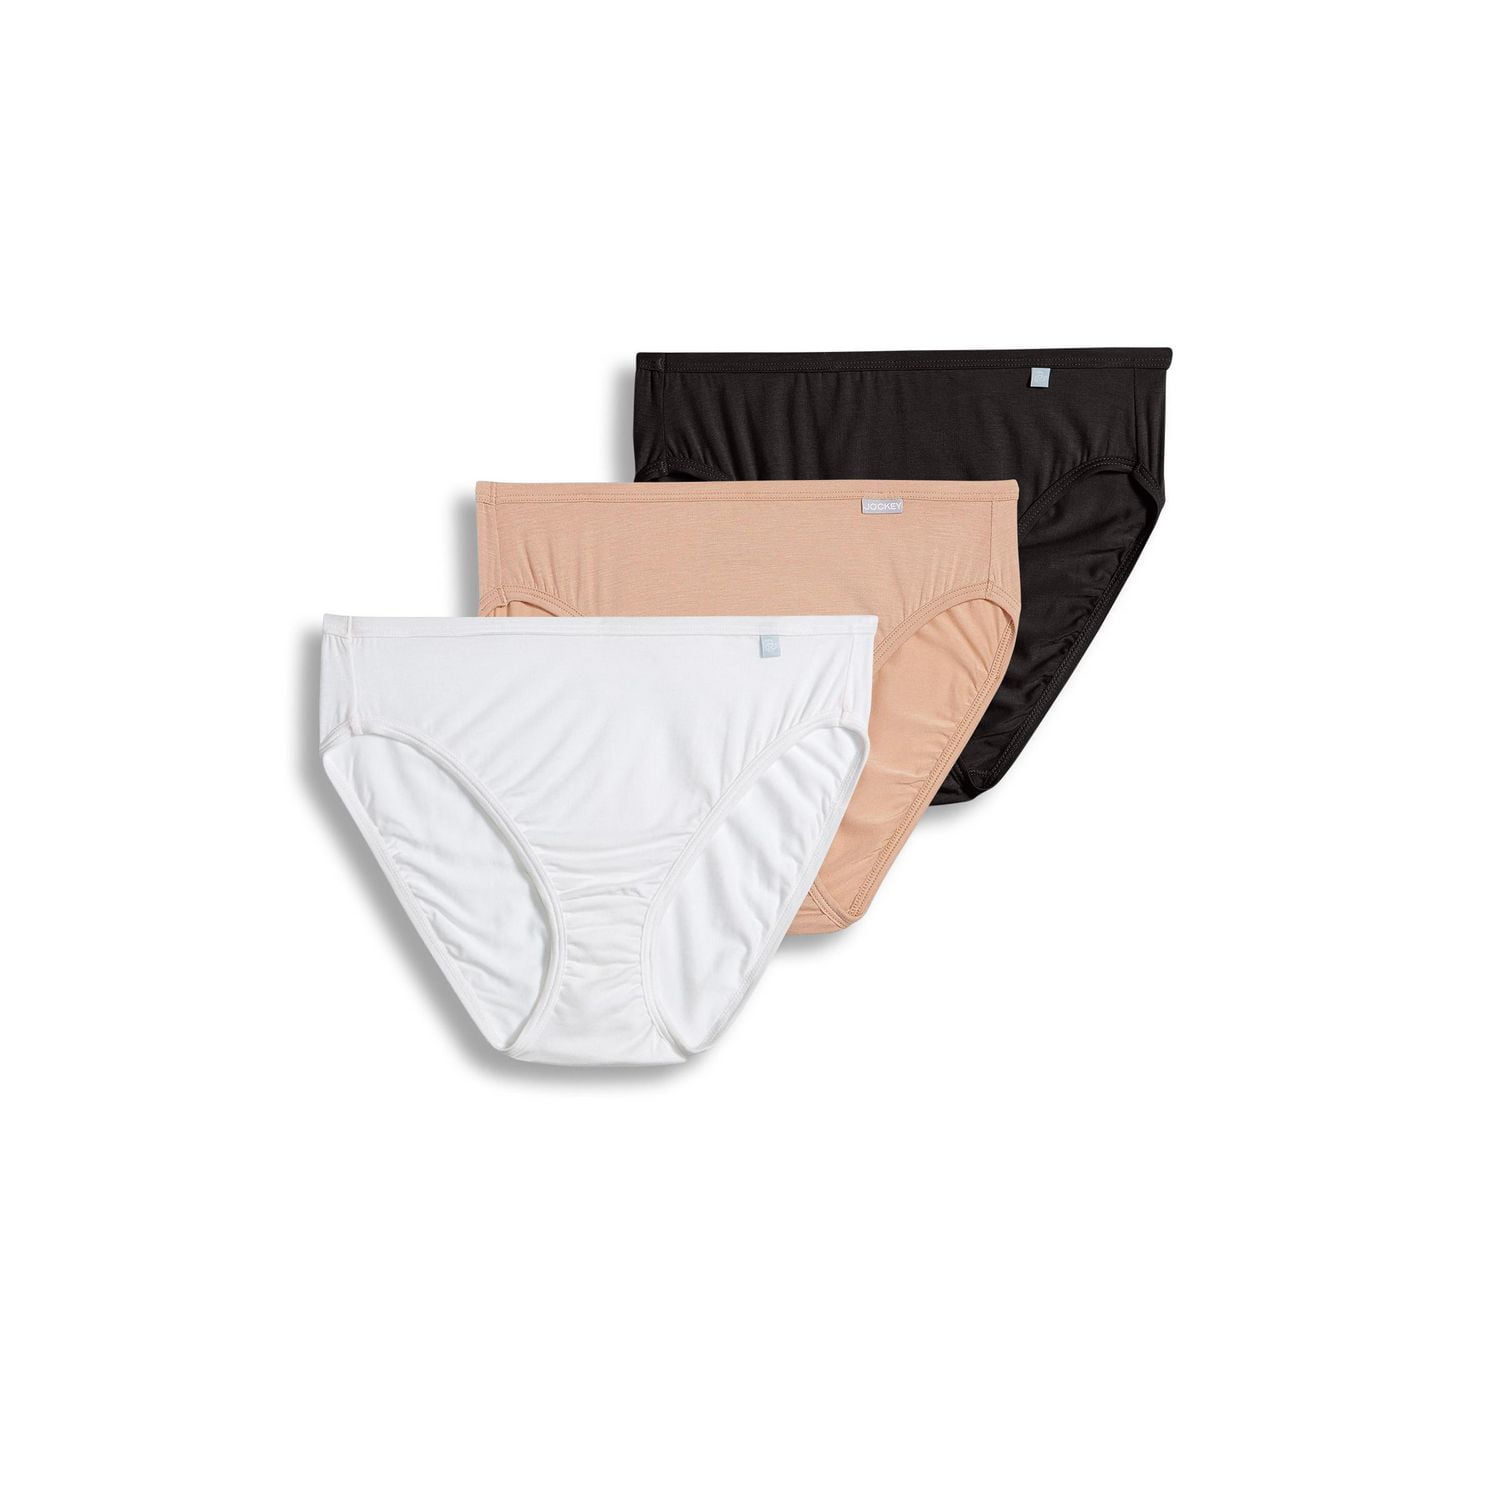 NEW - Jockey Women's Underwear - 3 Pack French Ghana